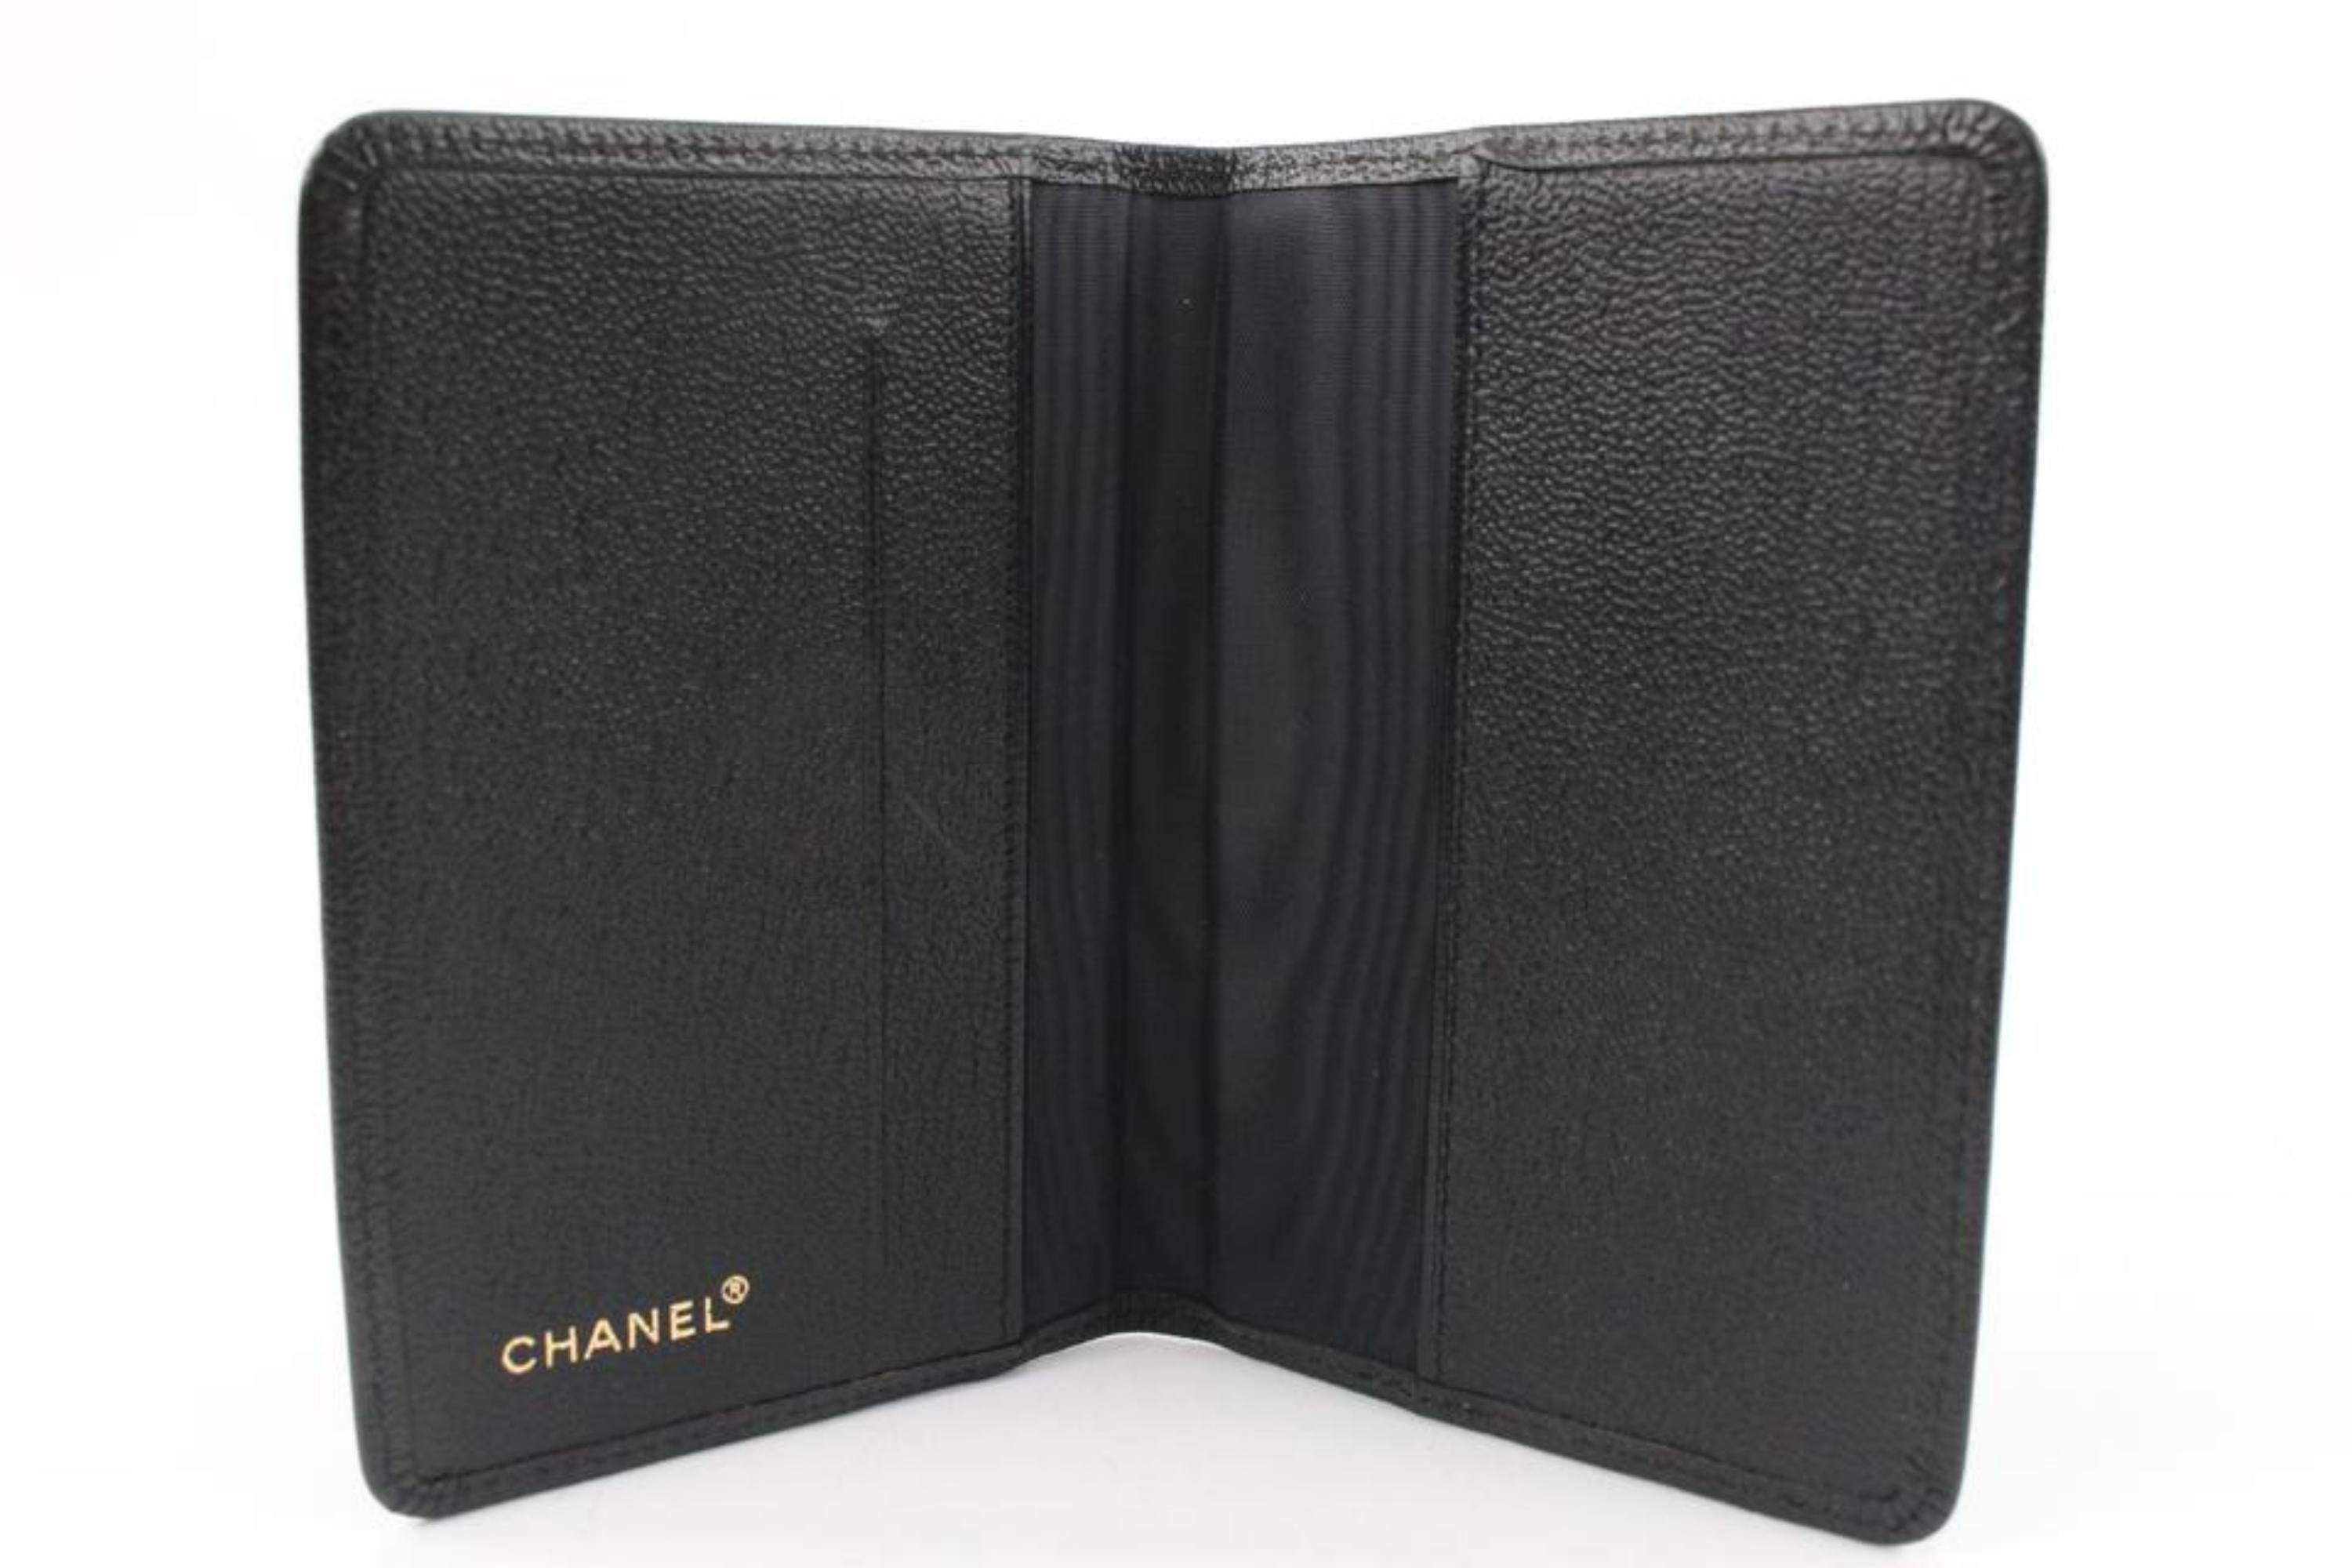 Chanel Black Calfskin Leather CC Card Holder Wallet Case 64ck225s 6